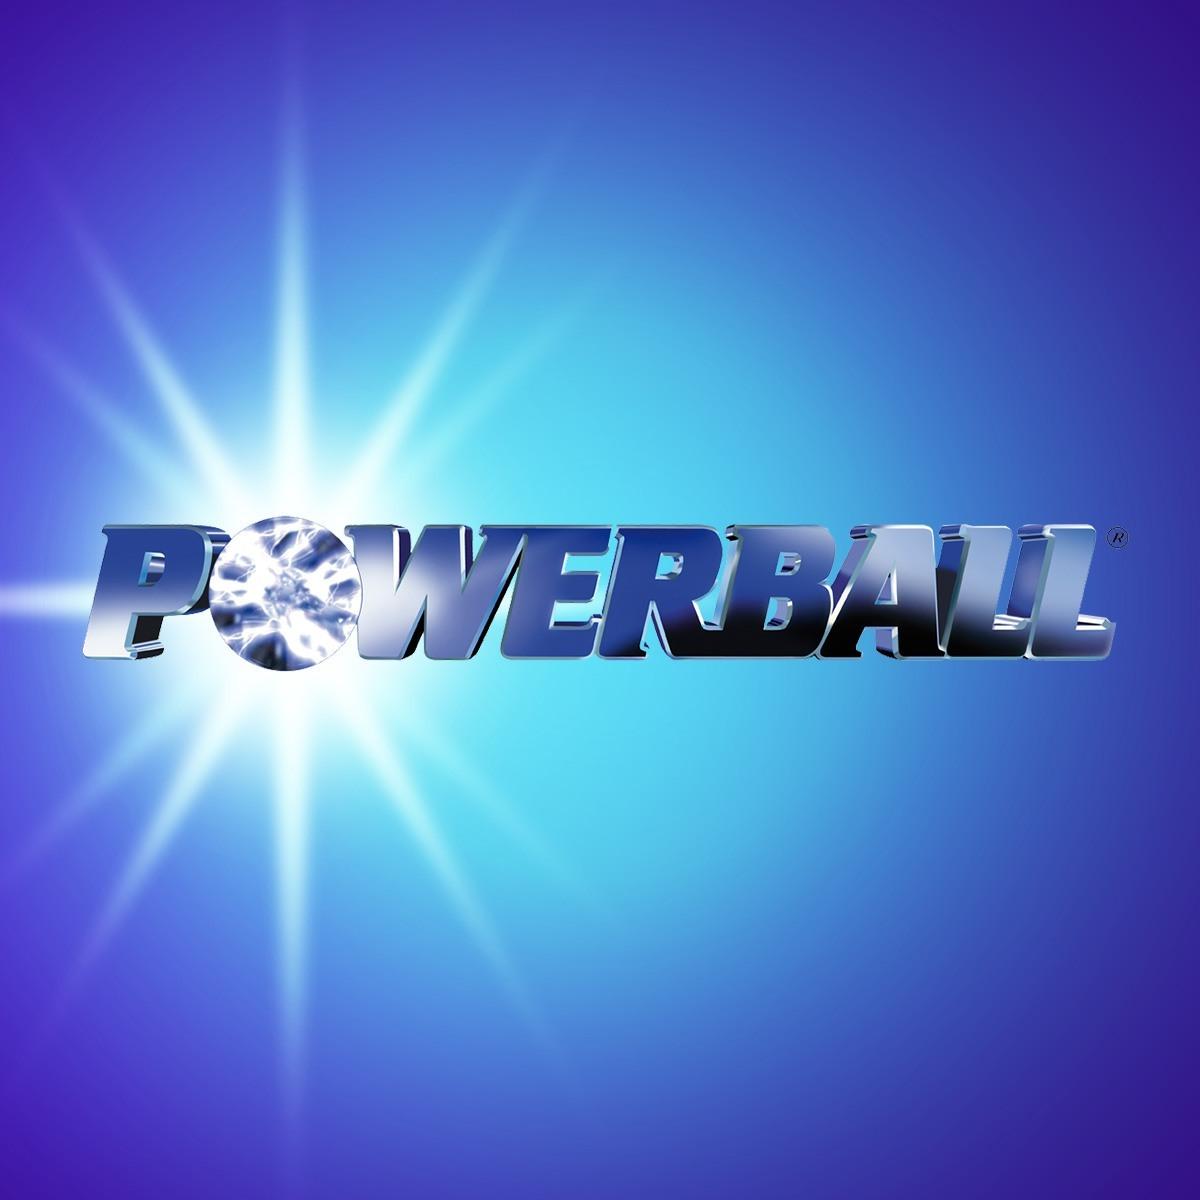 Powerball - Play Powerball Online | Oz Lotteries